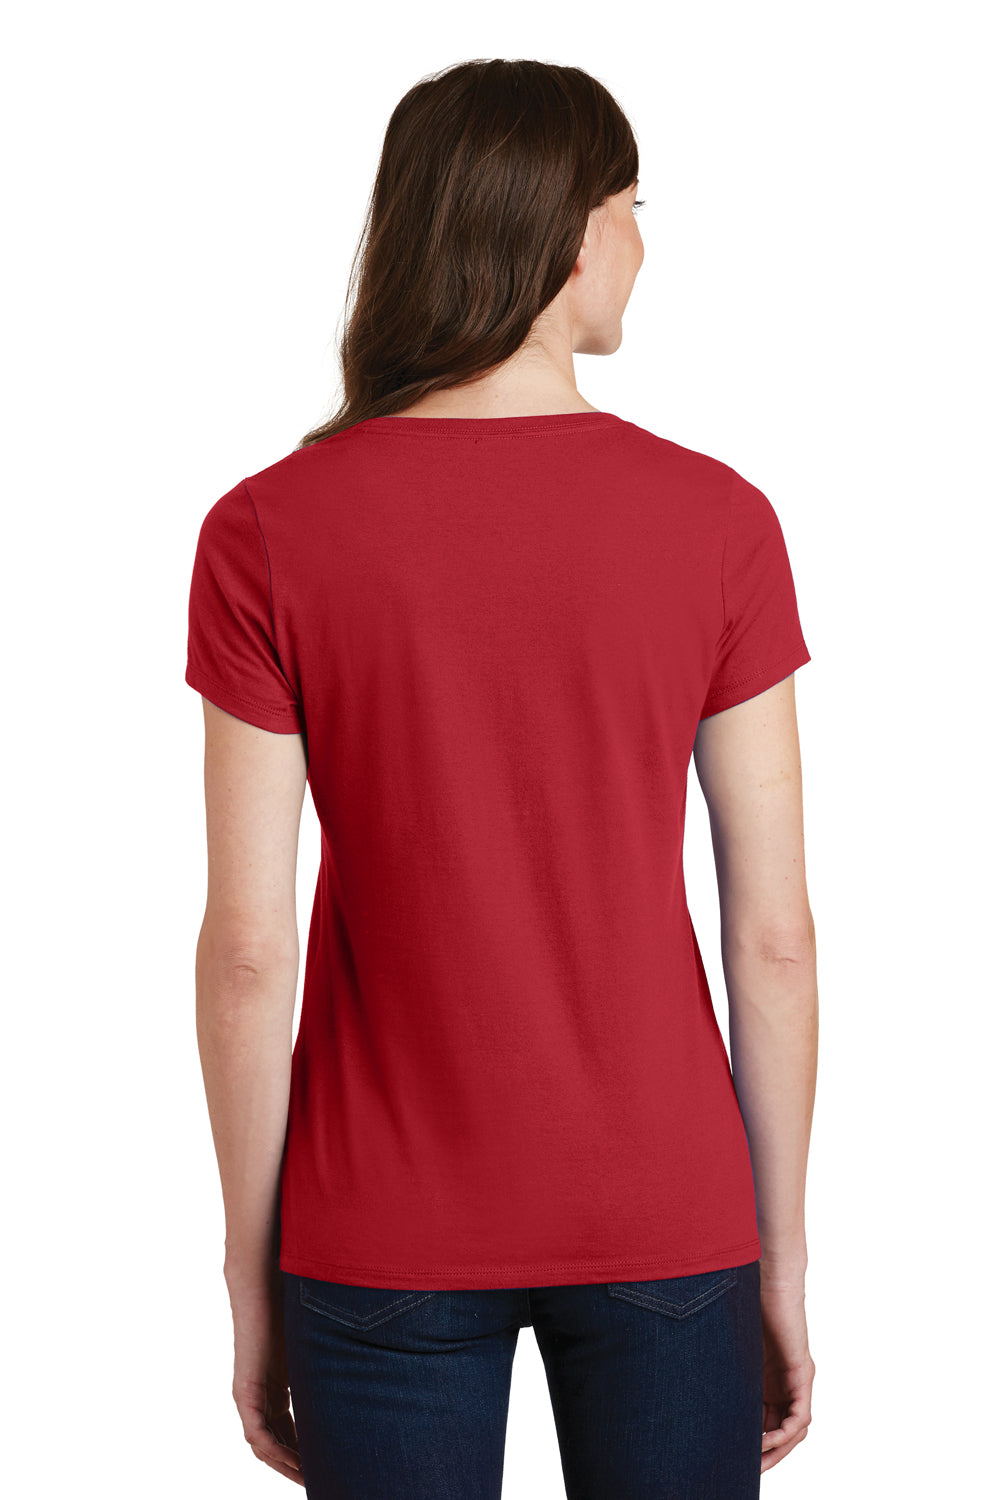 Port & Company LPC450V Womens Fan Favorite Short Sleeve V-Neck T-Shirt Cardinal Red Back